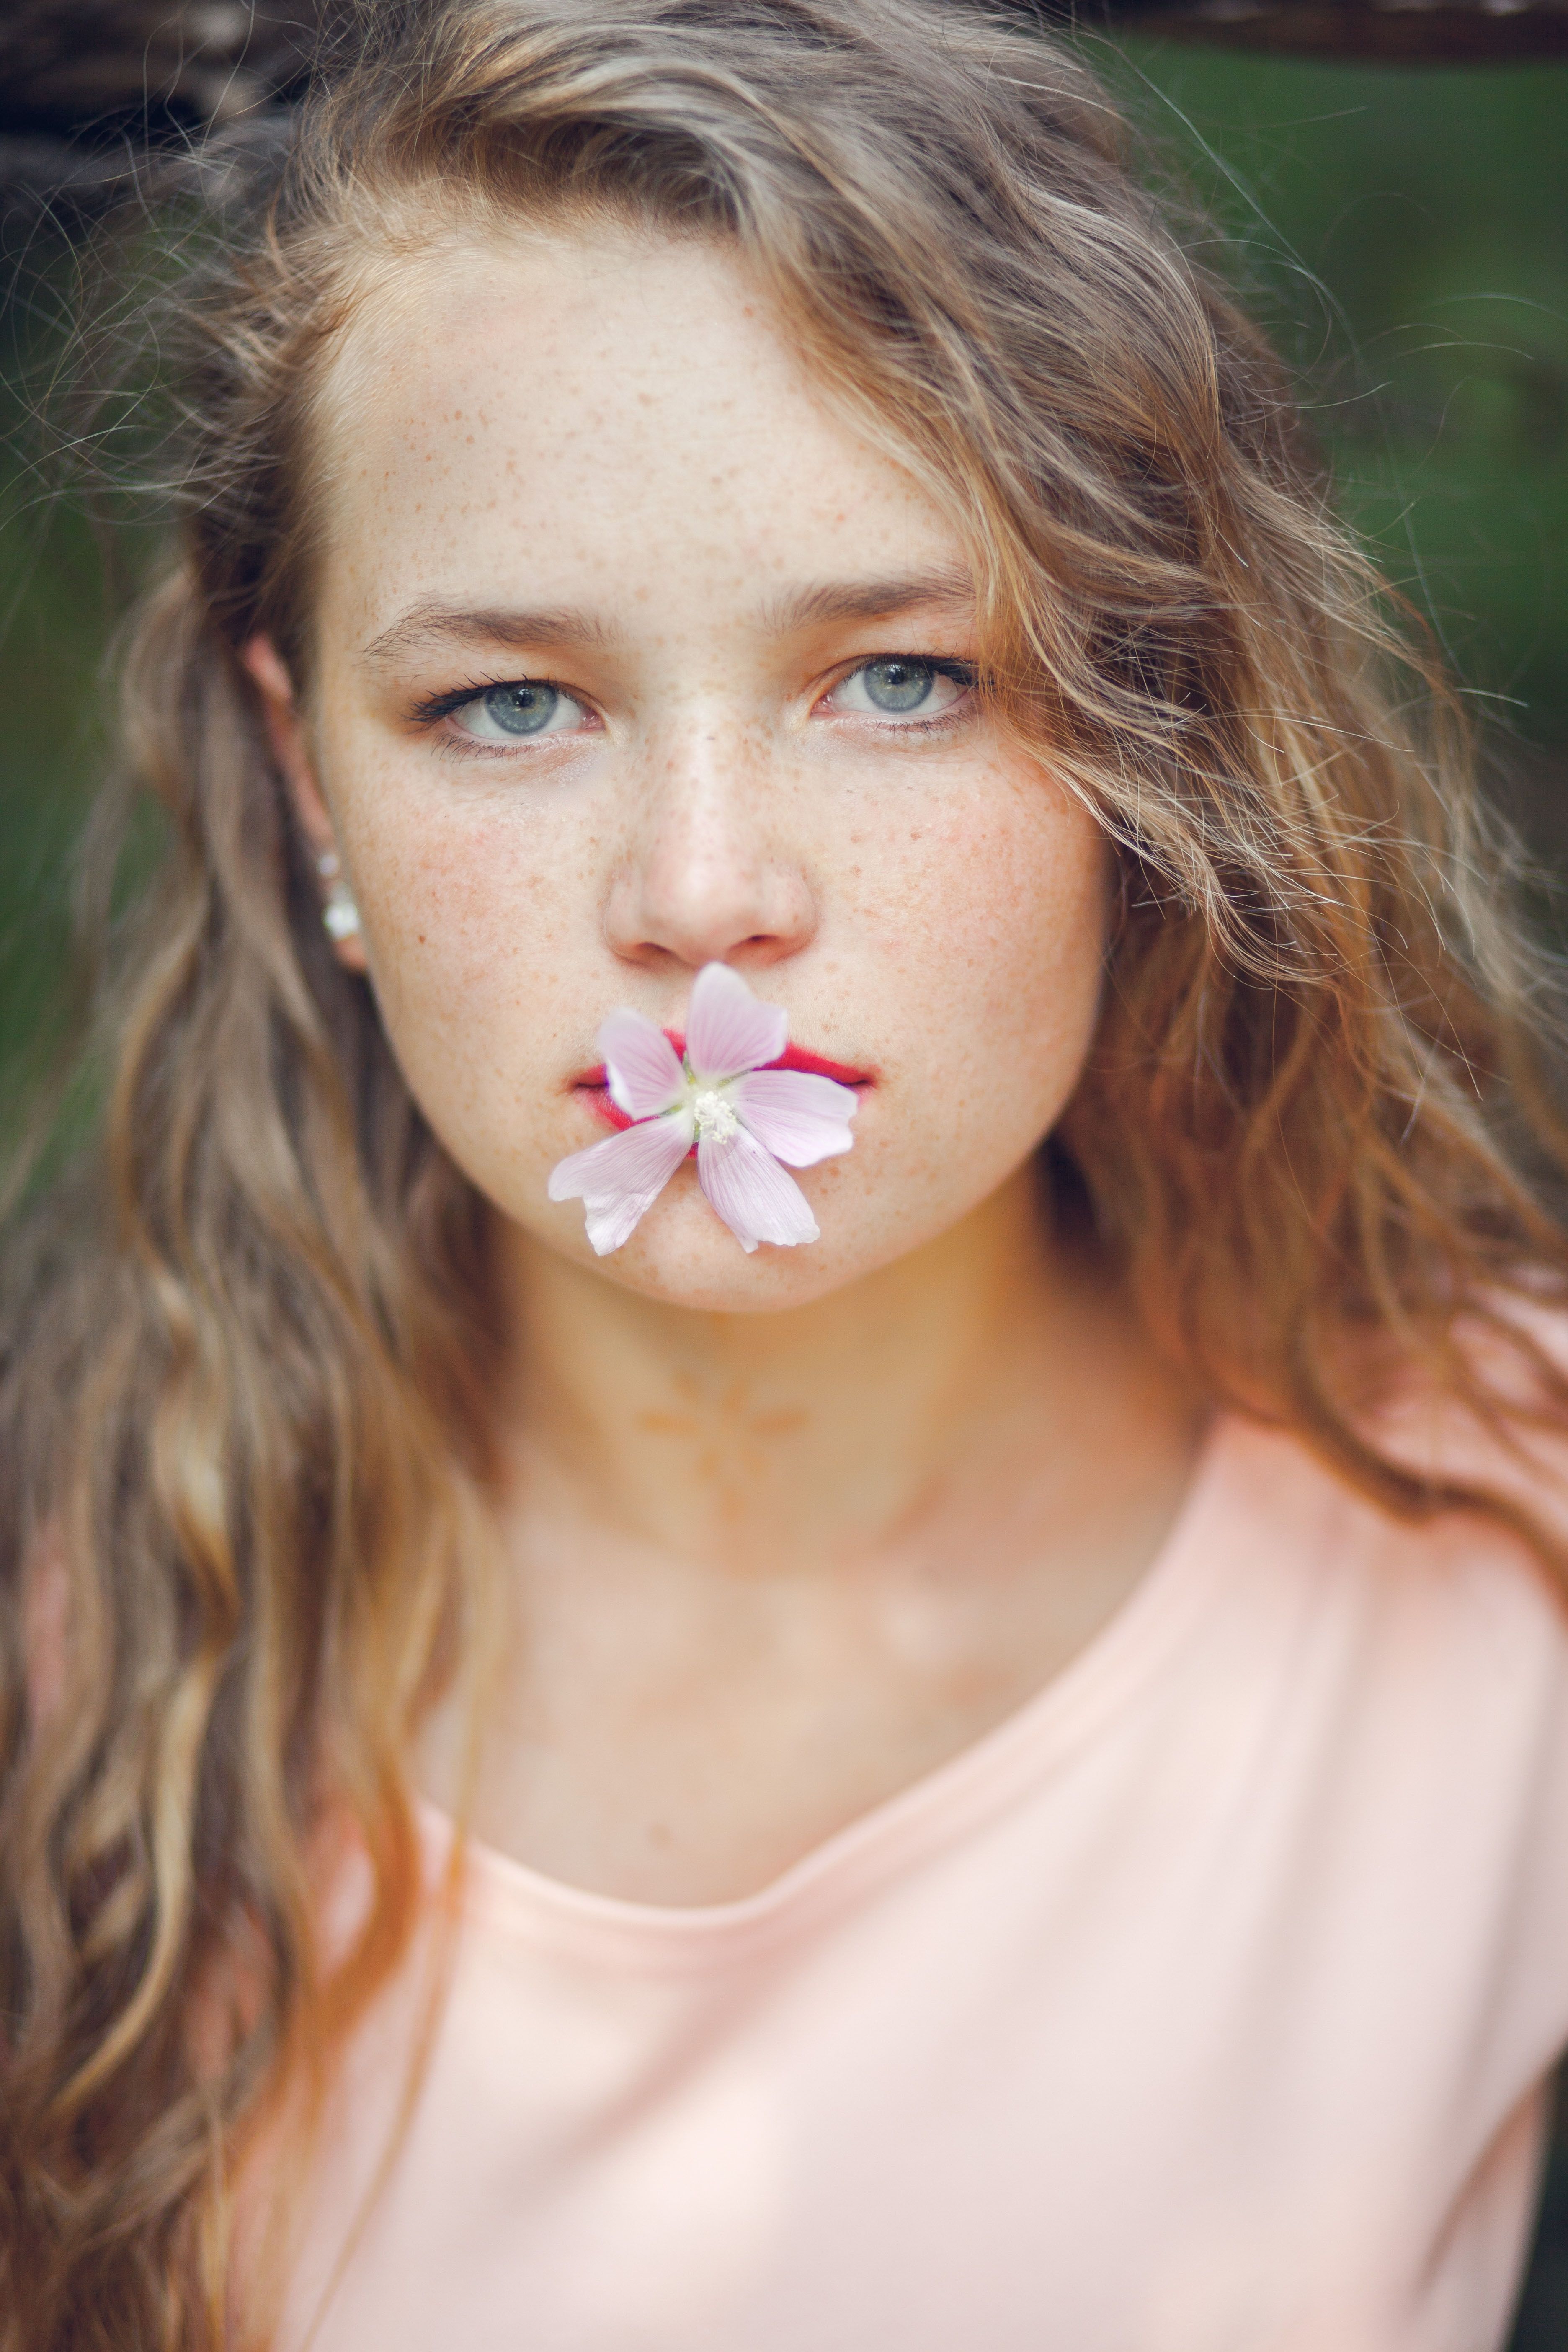 Download 3744x5616 Woman, Pink Flower, Model, Freckles, Earring